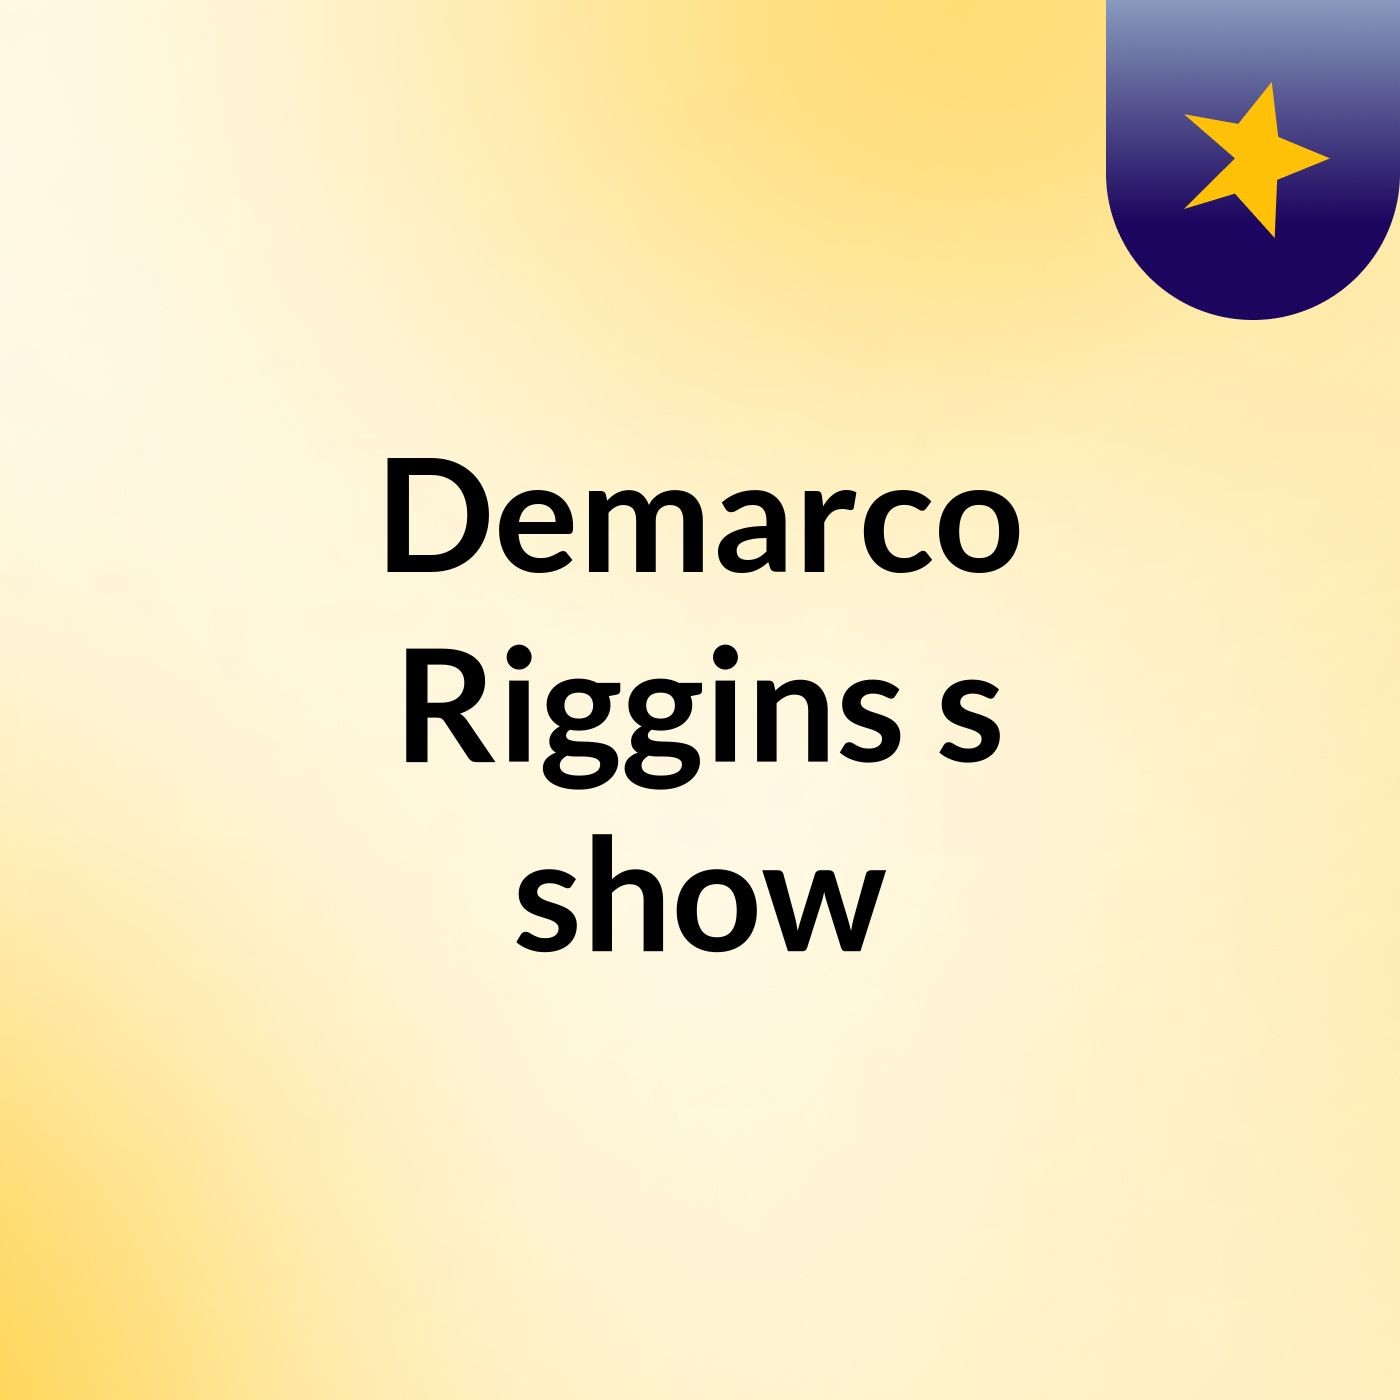 Demarco Riggins's show